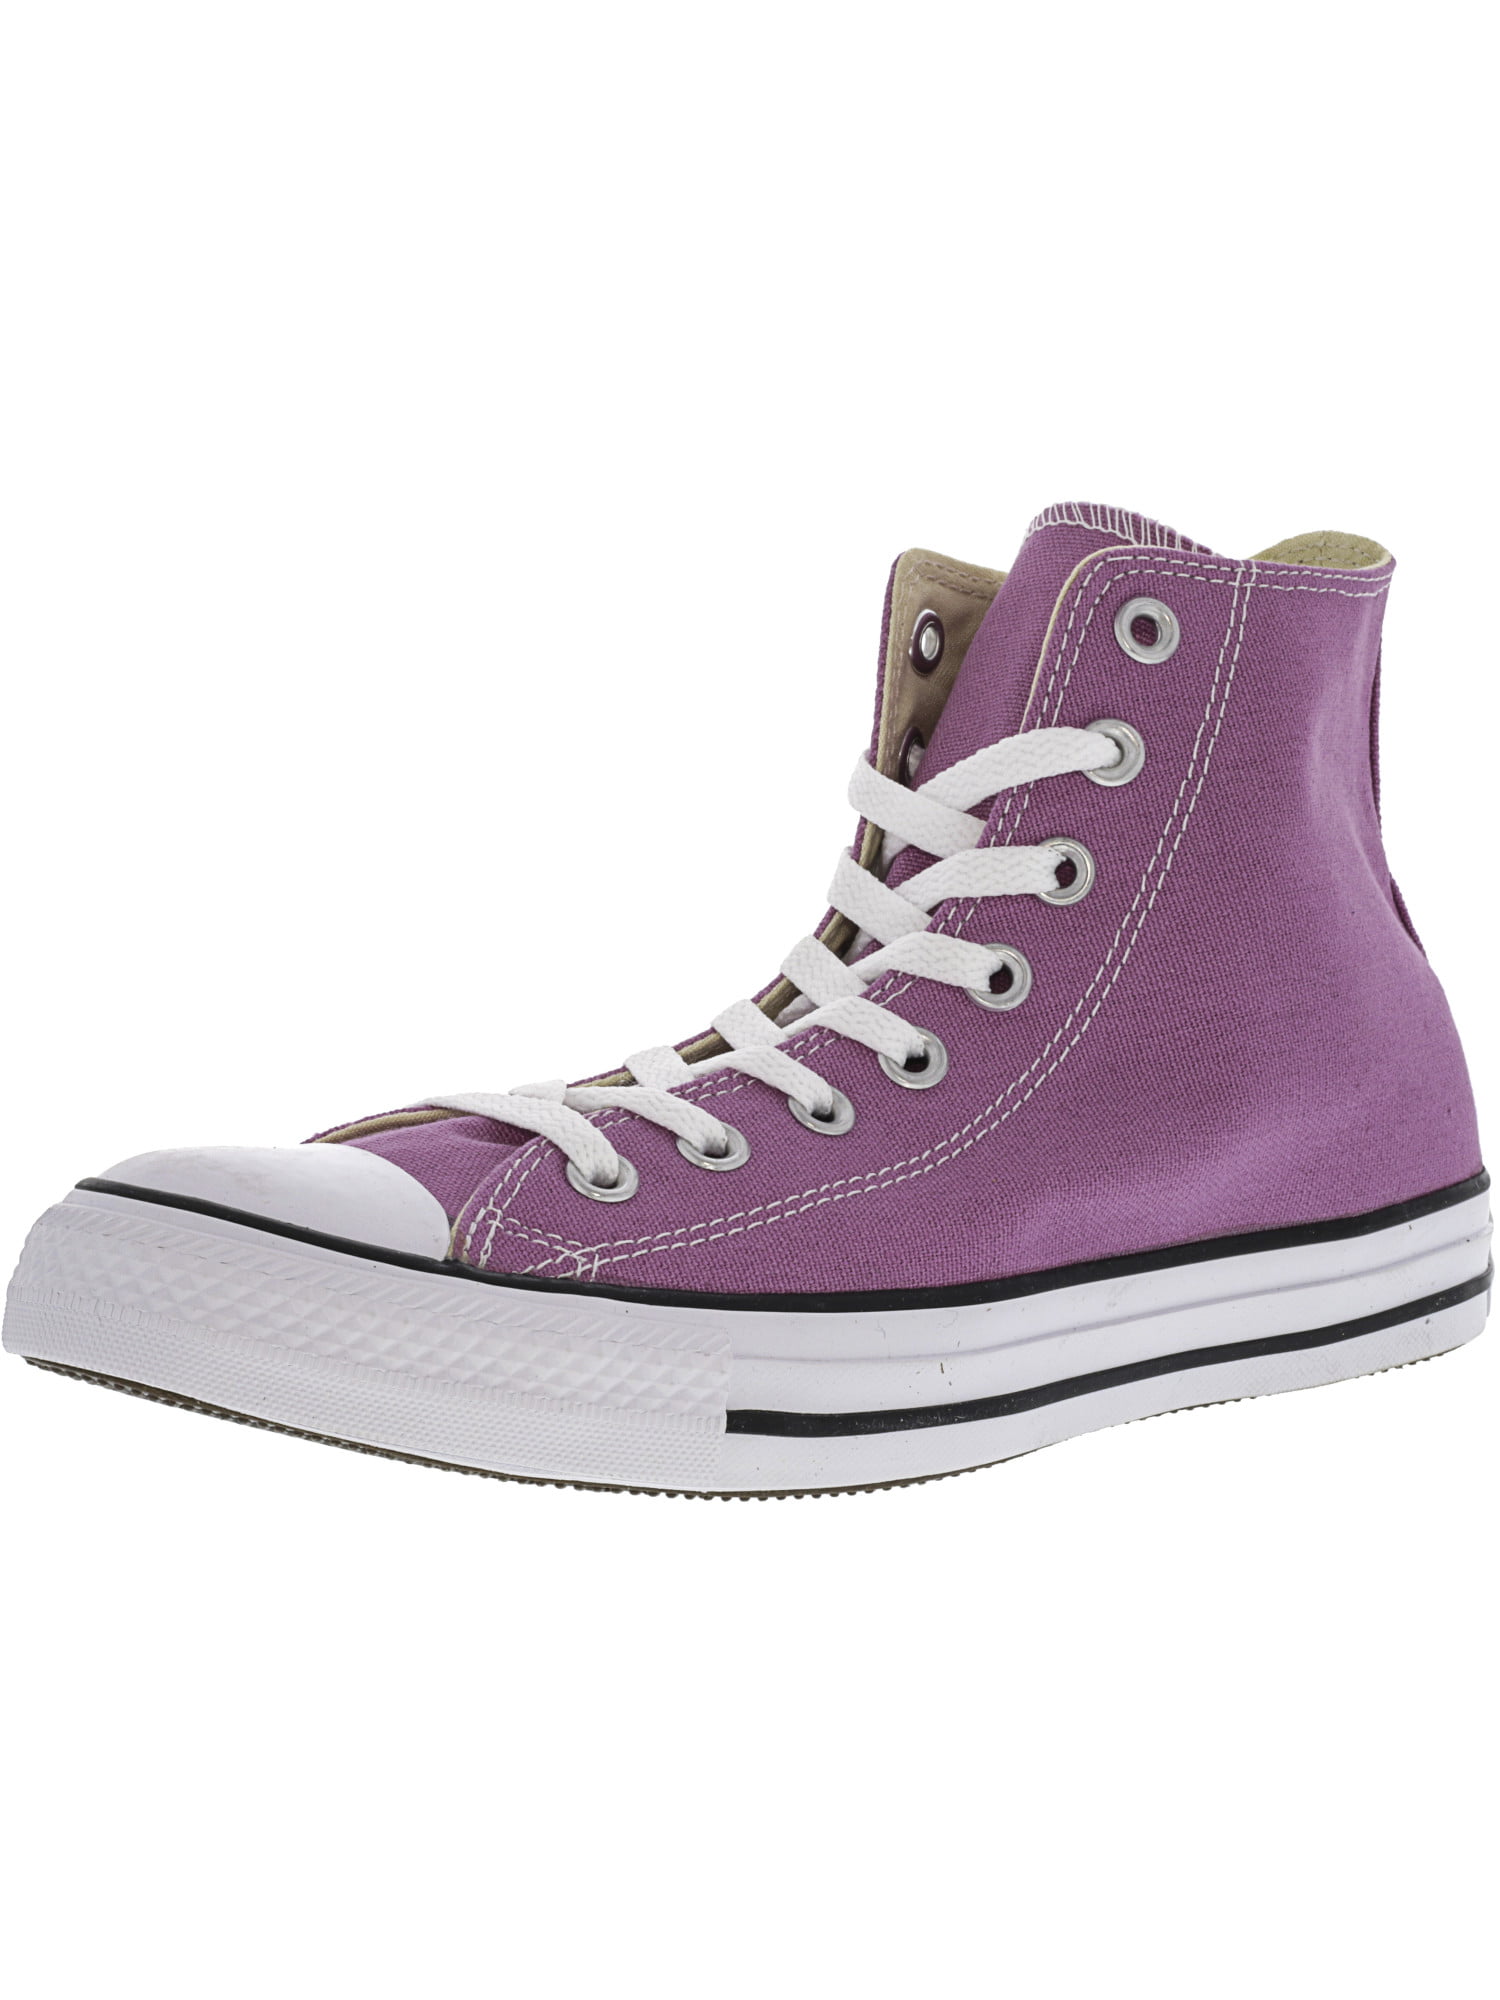 purple converse 7.5